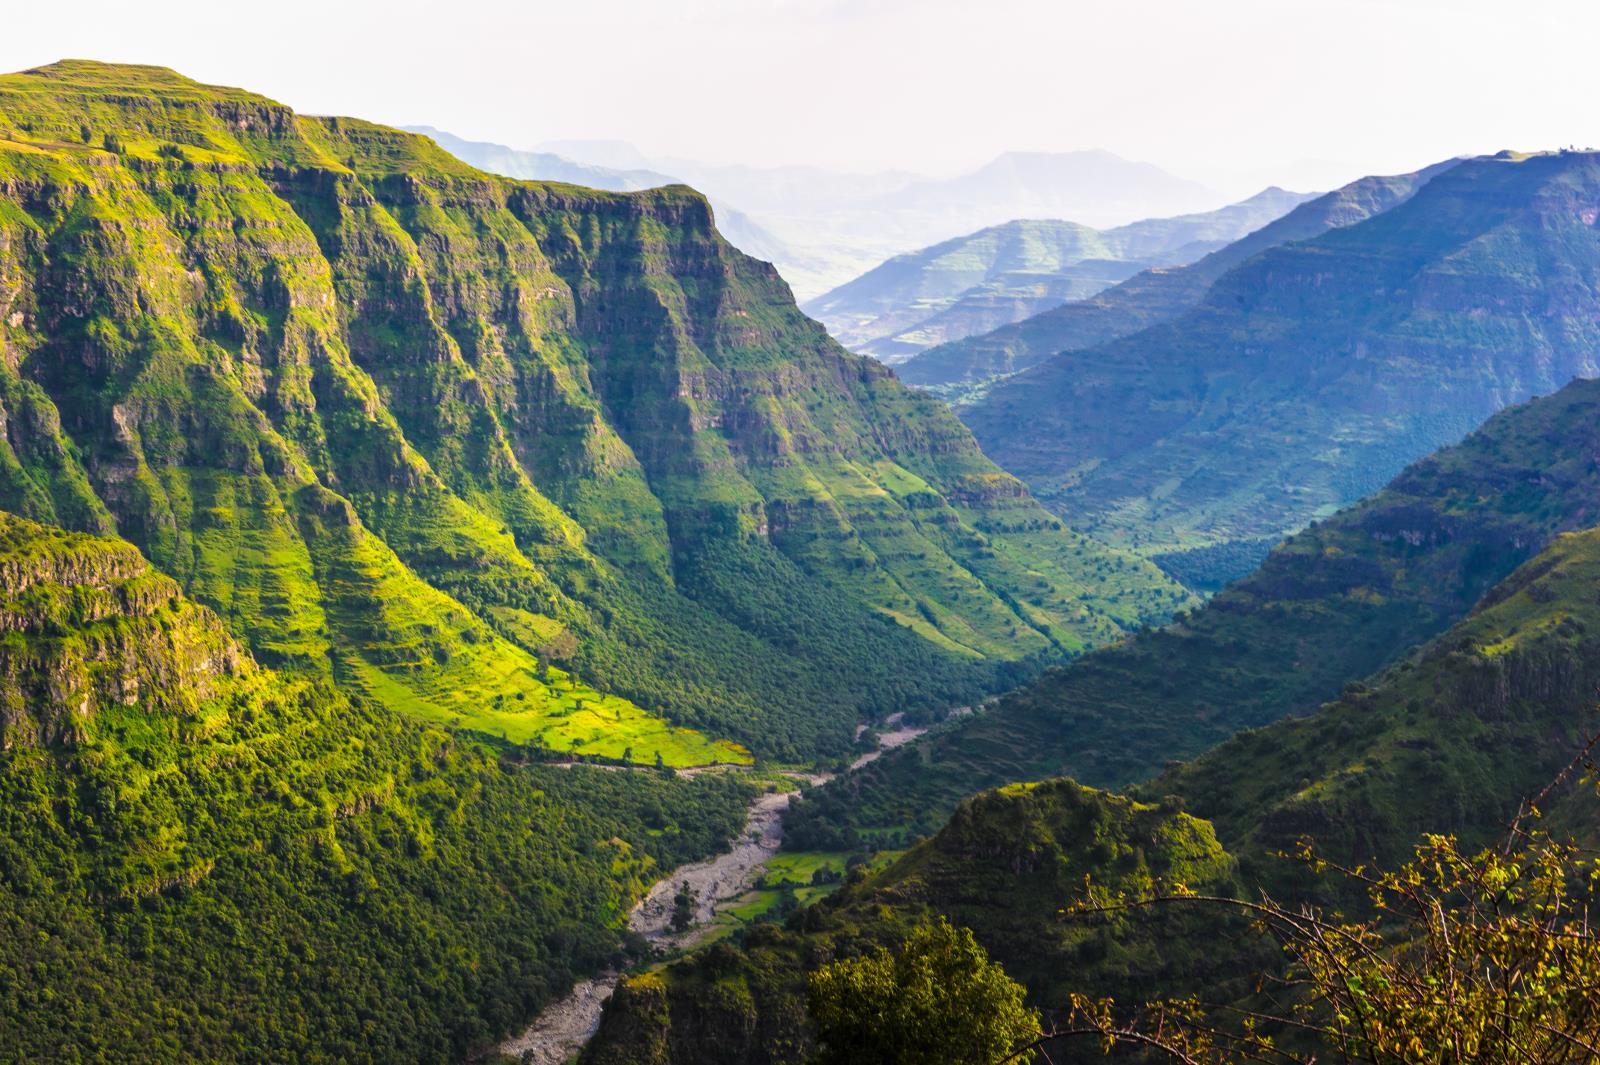 Valley among the mountains - Ethiopia